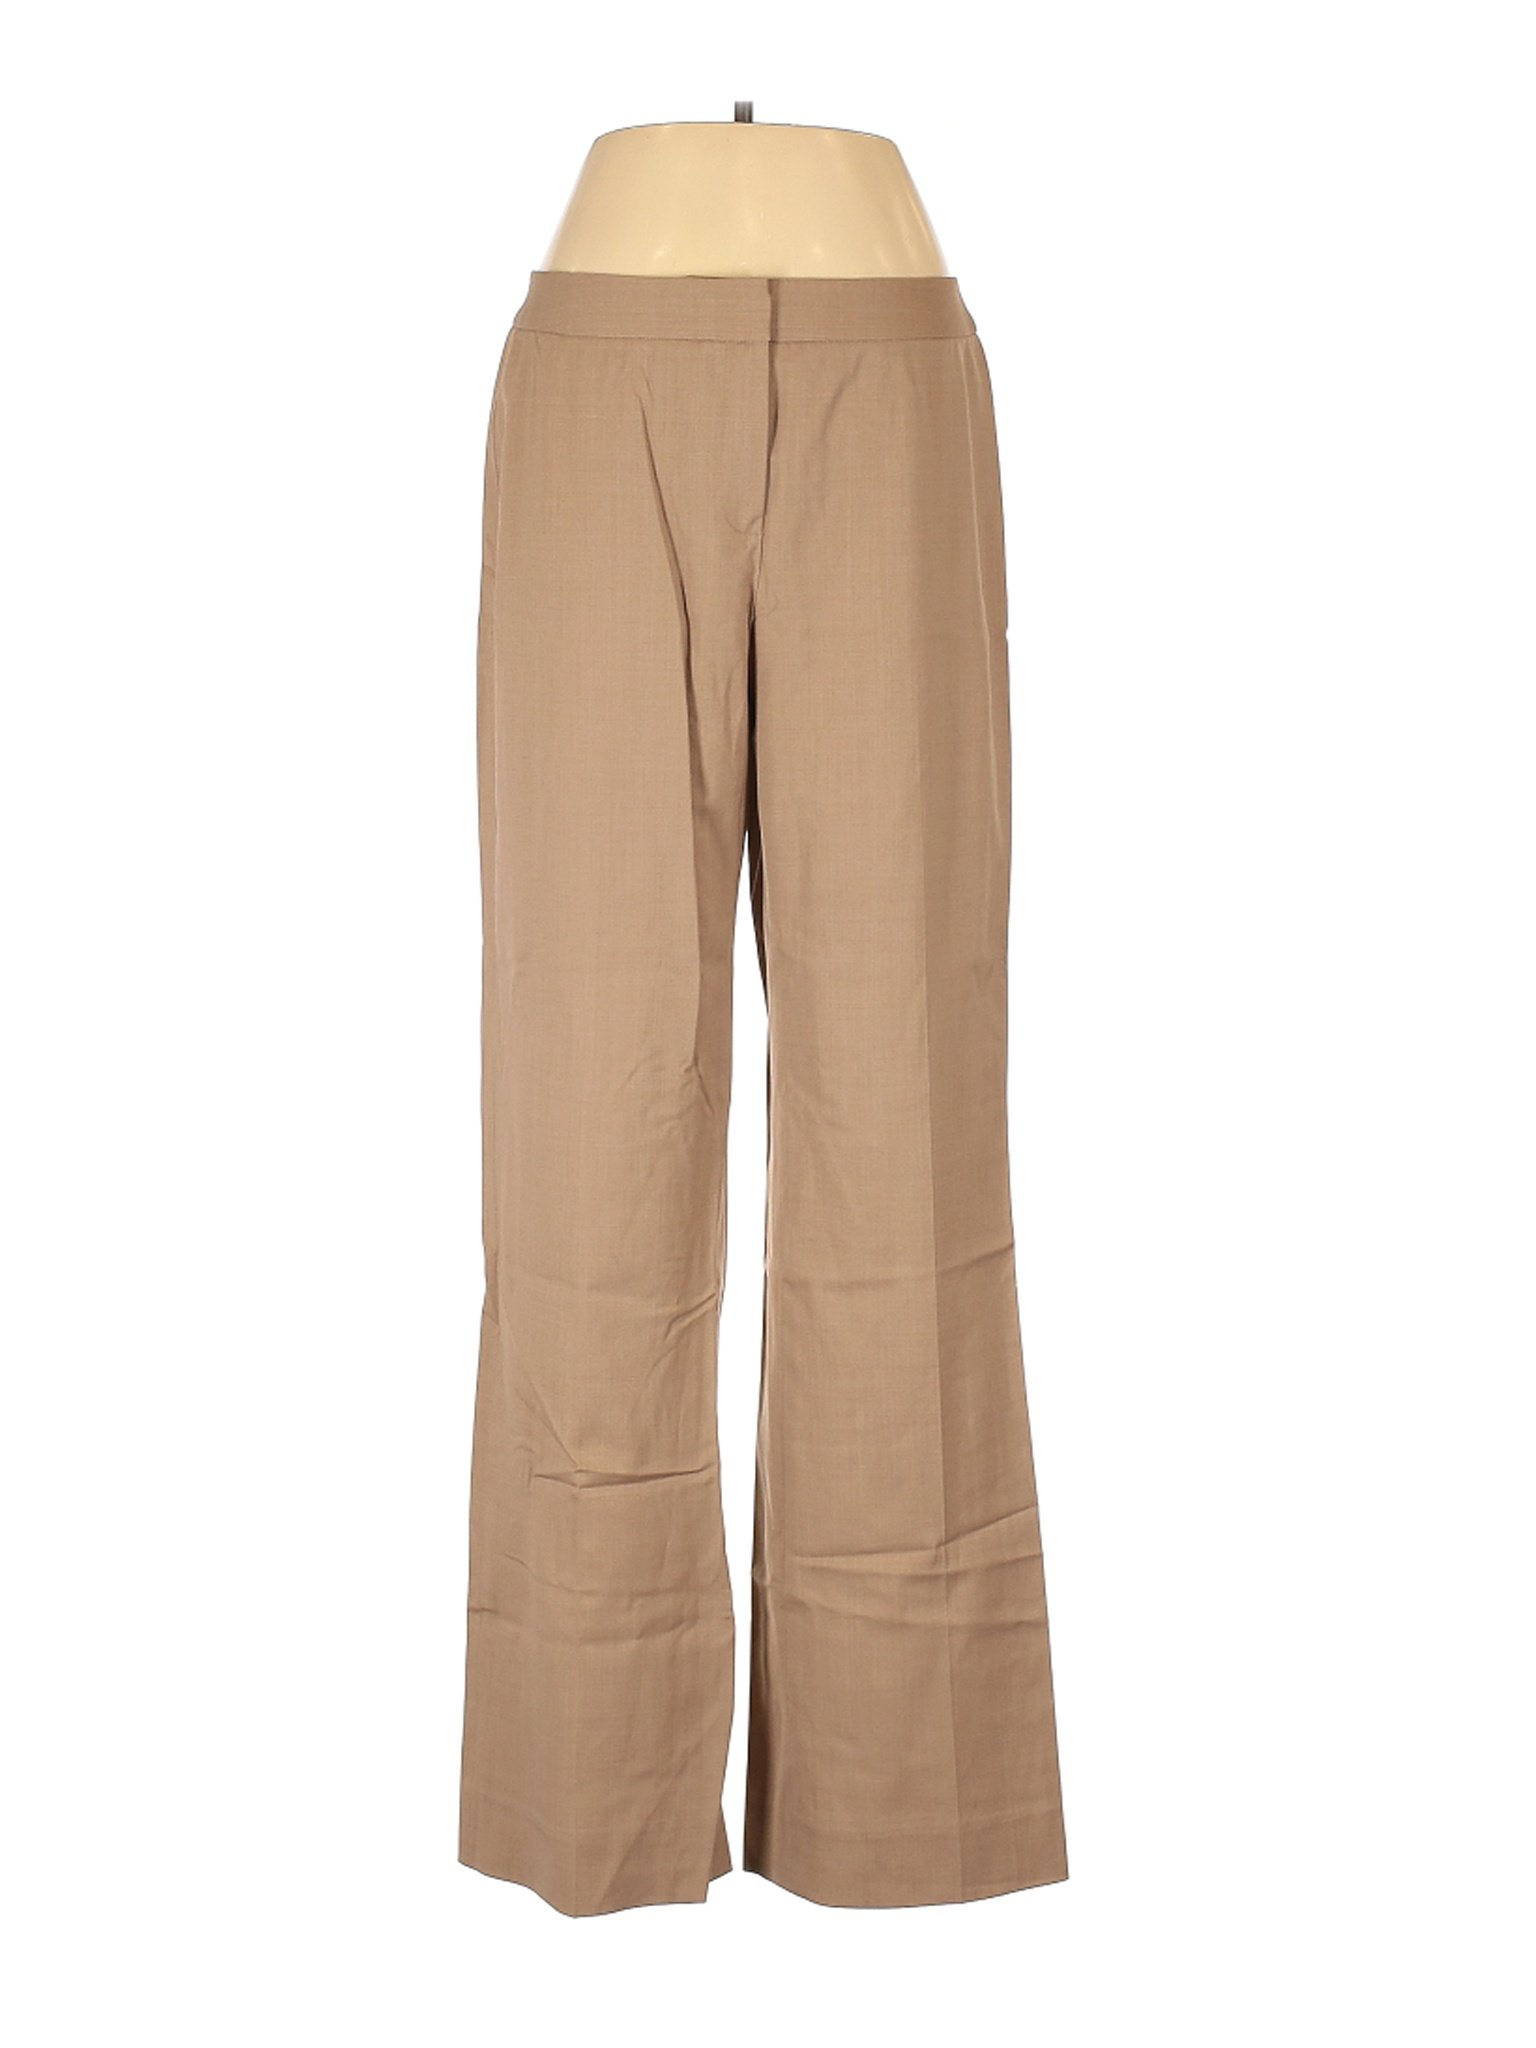 Lafayette 148 New York Women Brown Wool Pants 4 | eBay